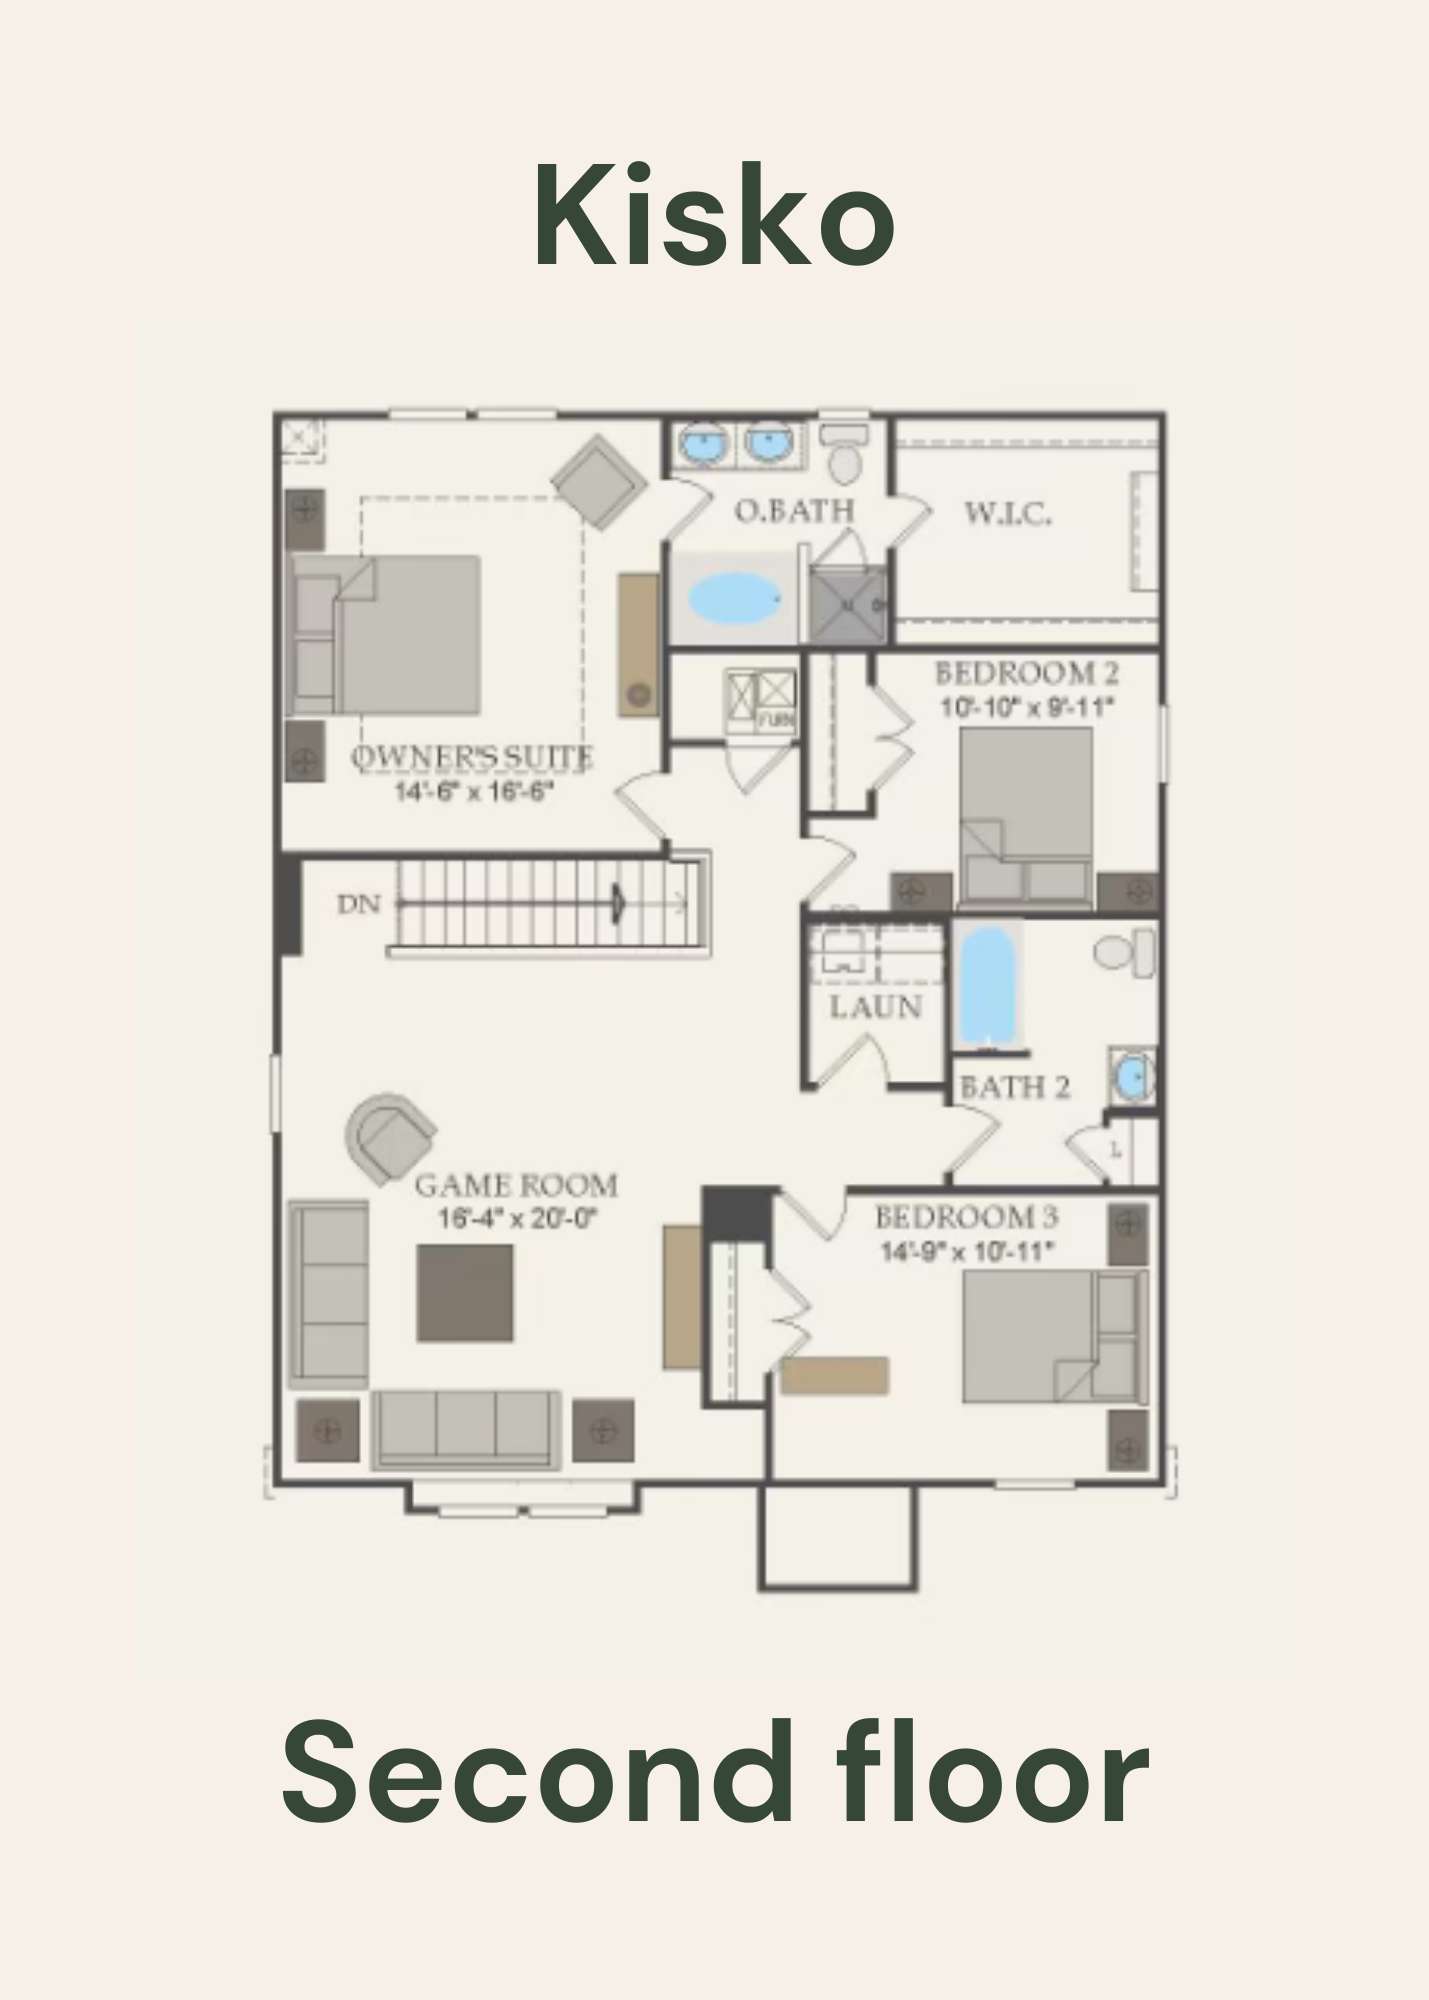 Kisko Second Floor - Floor Plan by Centex Homes